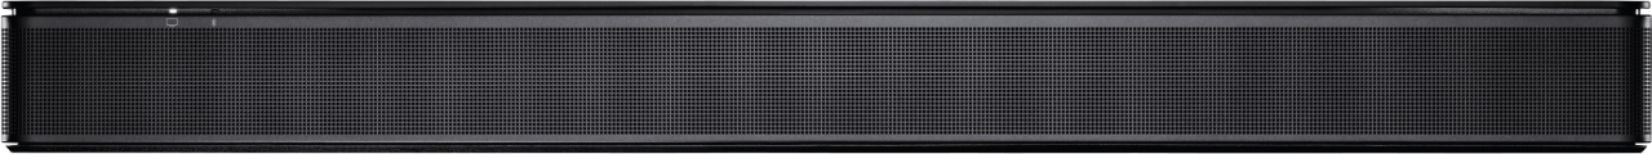 Bose TV Speaker Bluetooth Soundbar Black 838309-1100 - Best Buy | Best Buy U.S.